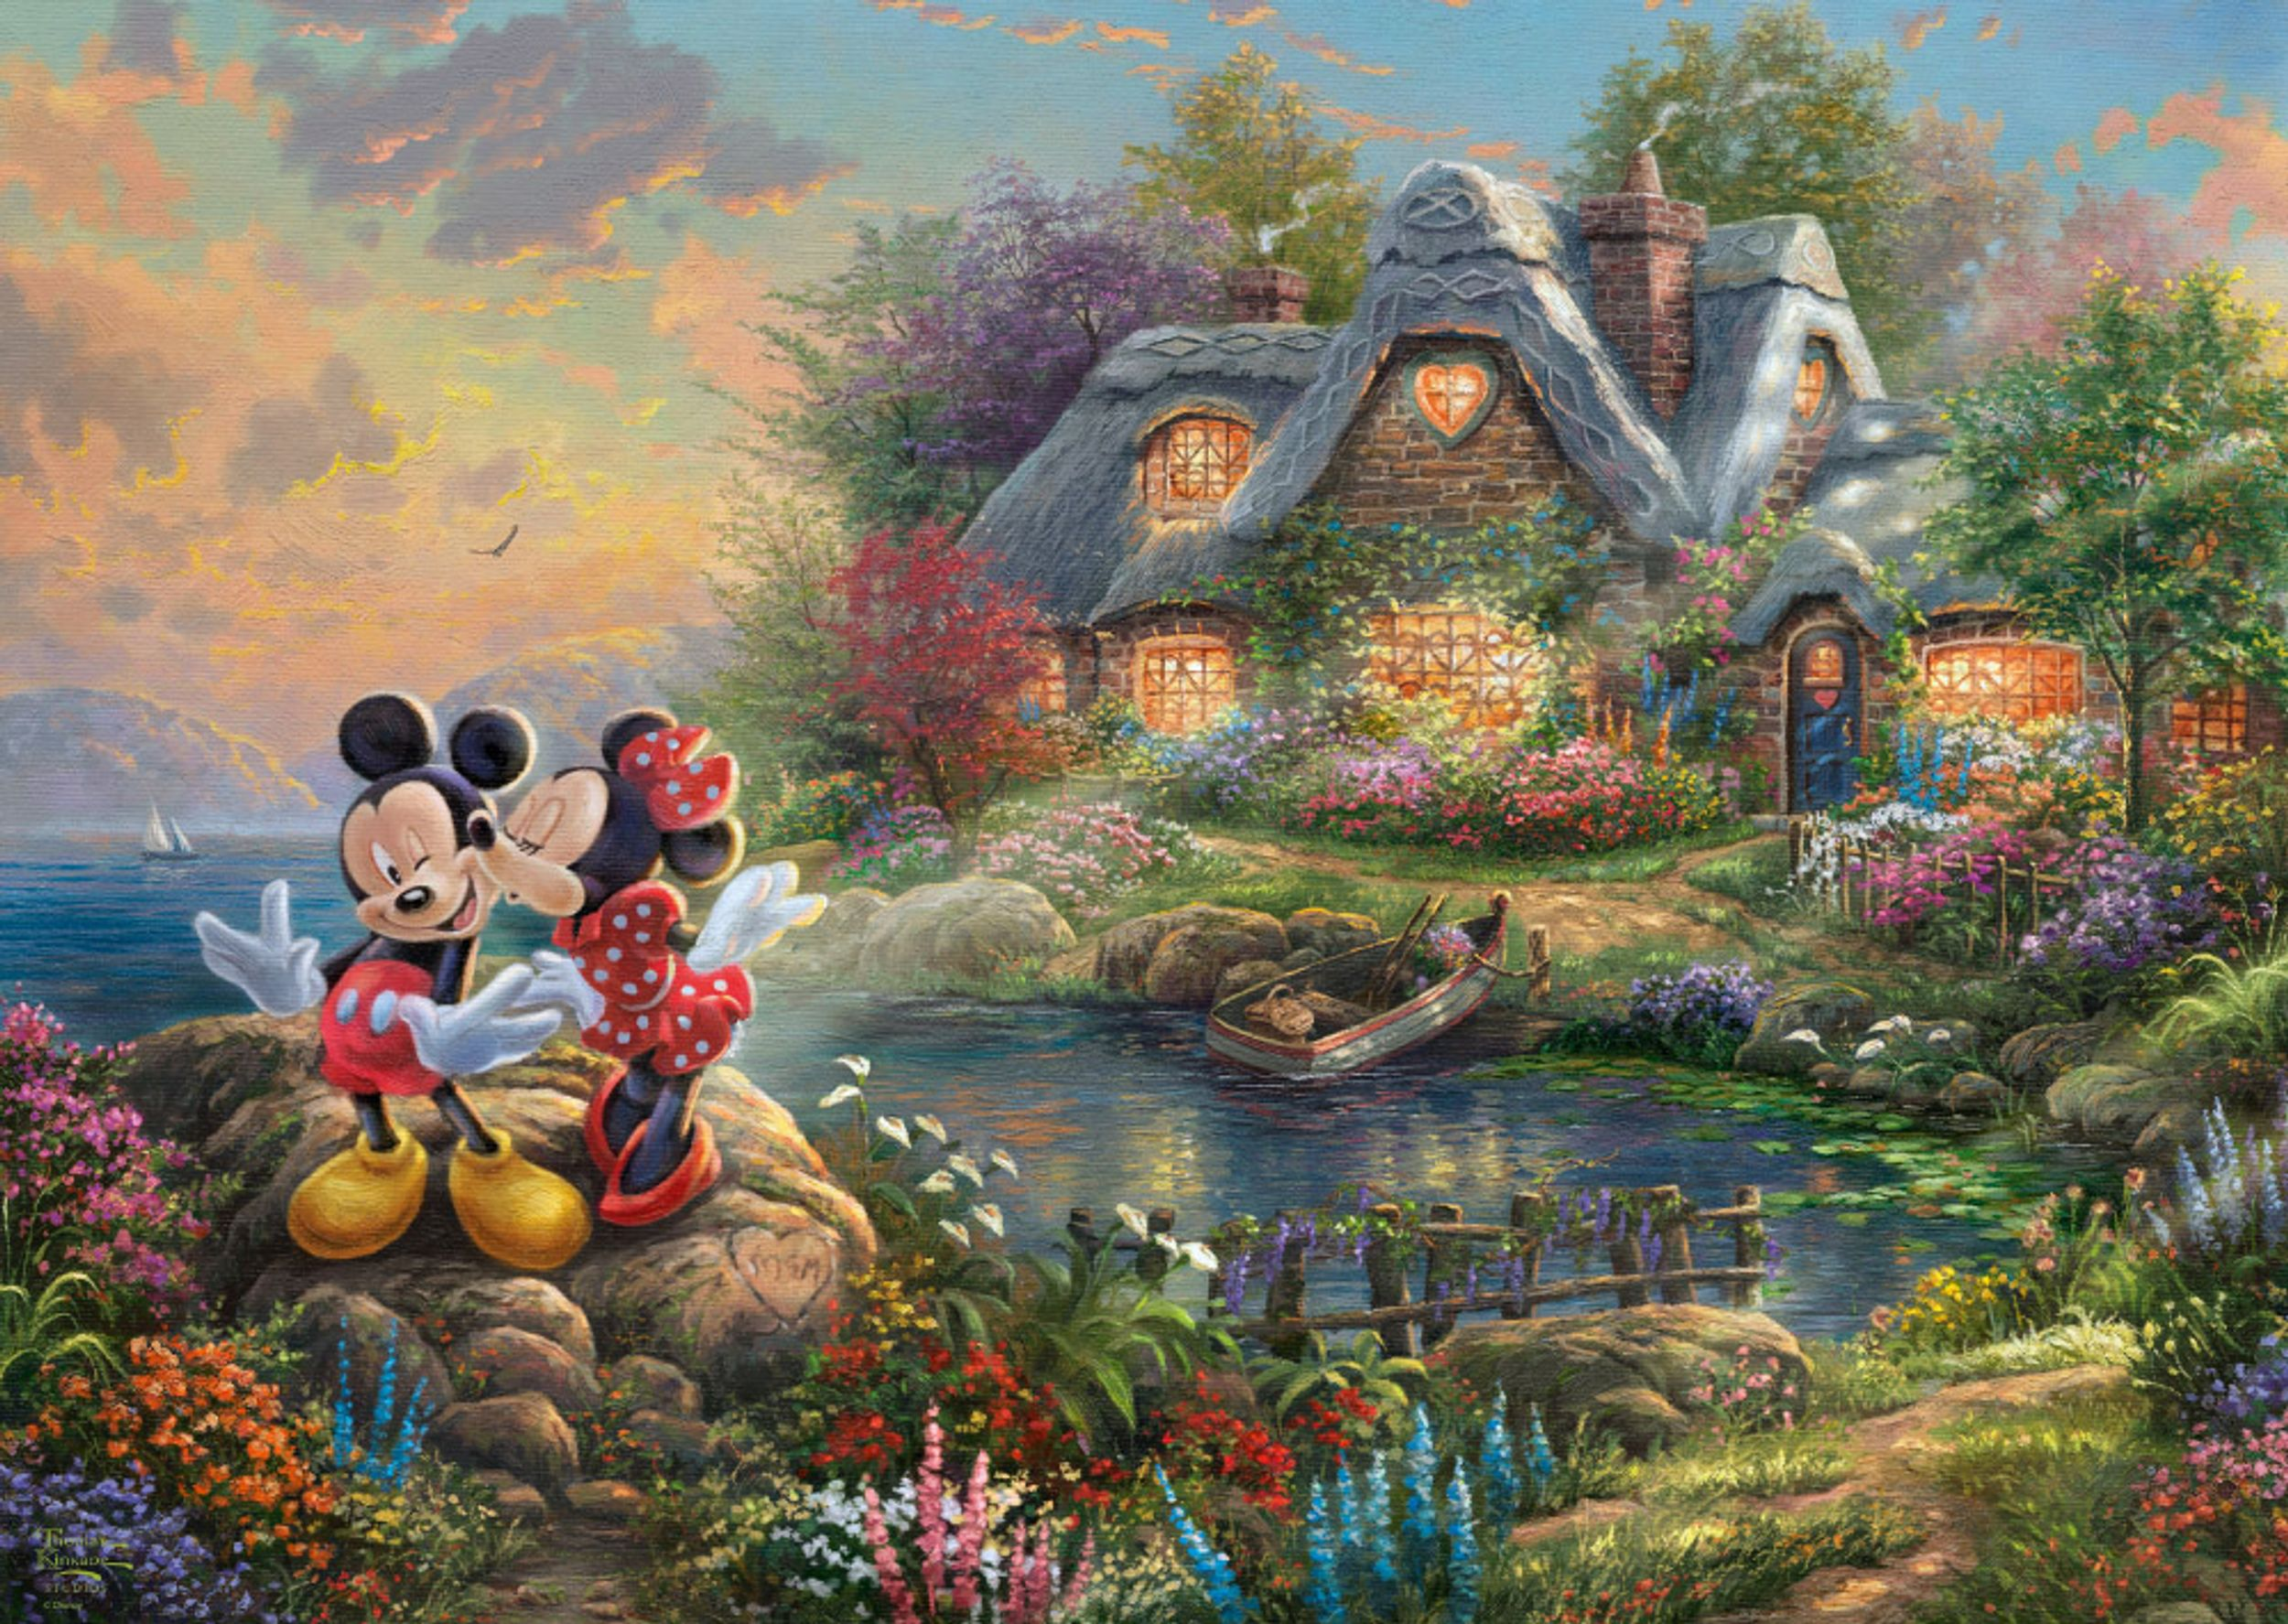 Puzzle SPIELE & Sweethearts Mickey Minnie SCHMIDT